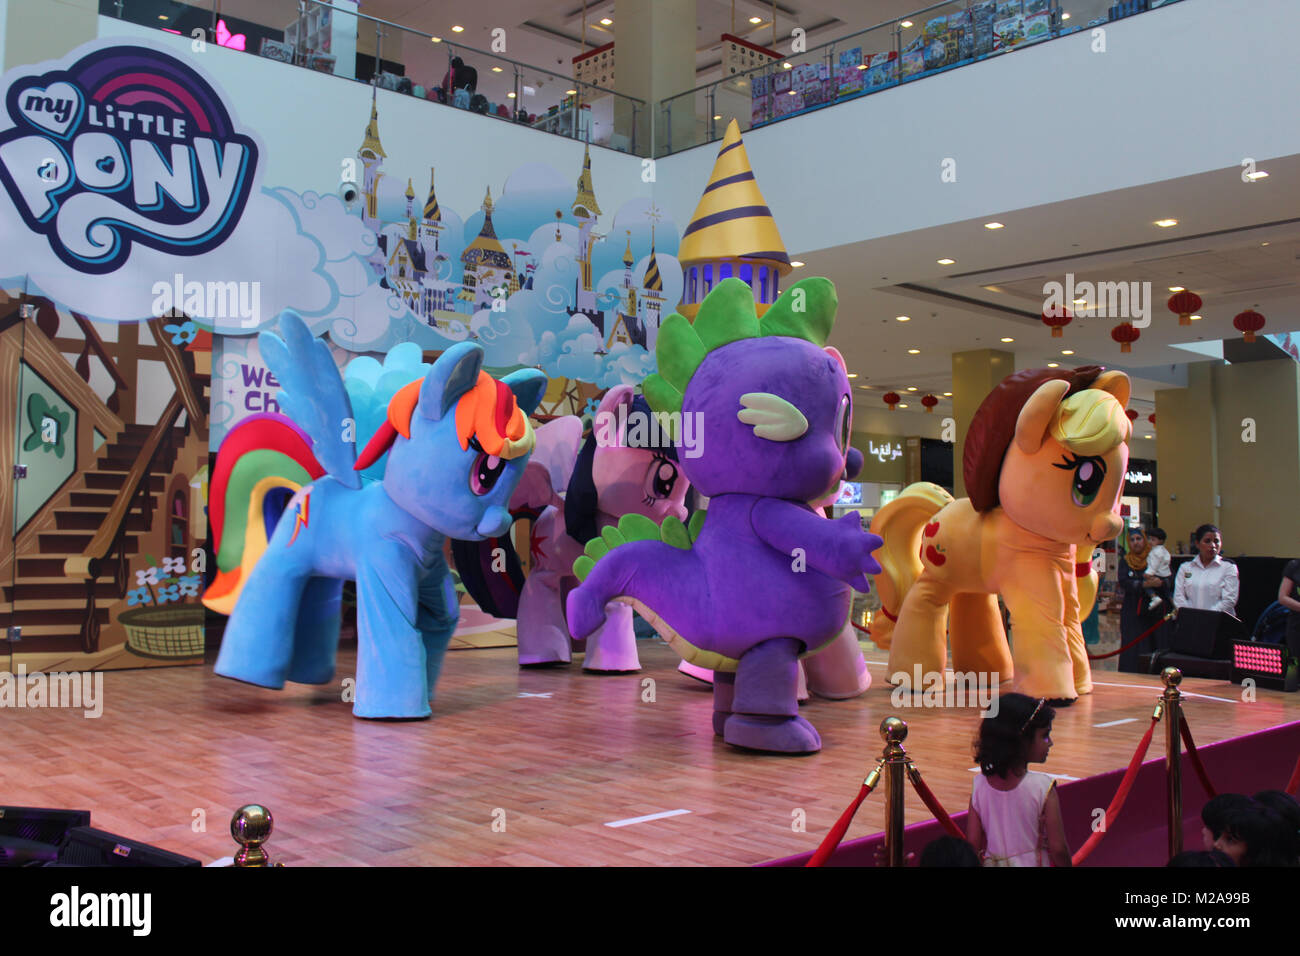 My Little Pony show for children at Dragon Mart 2, Dubai, United Arab Emirates. Stock Photo